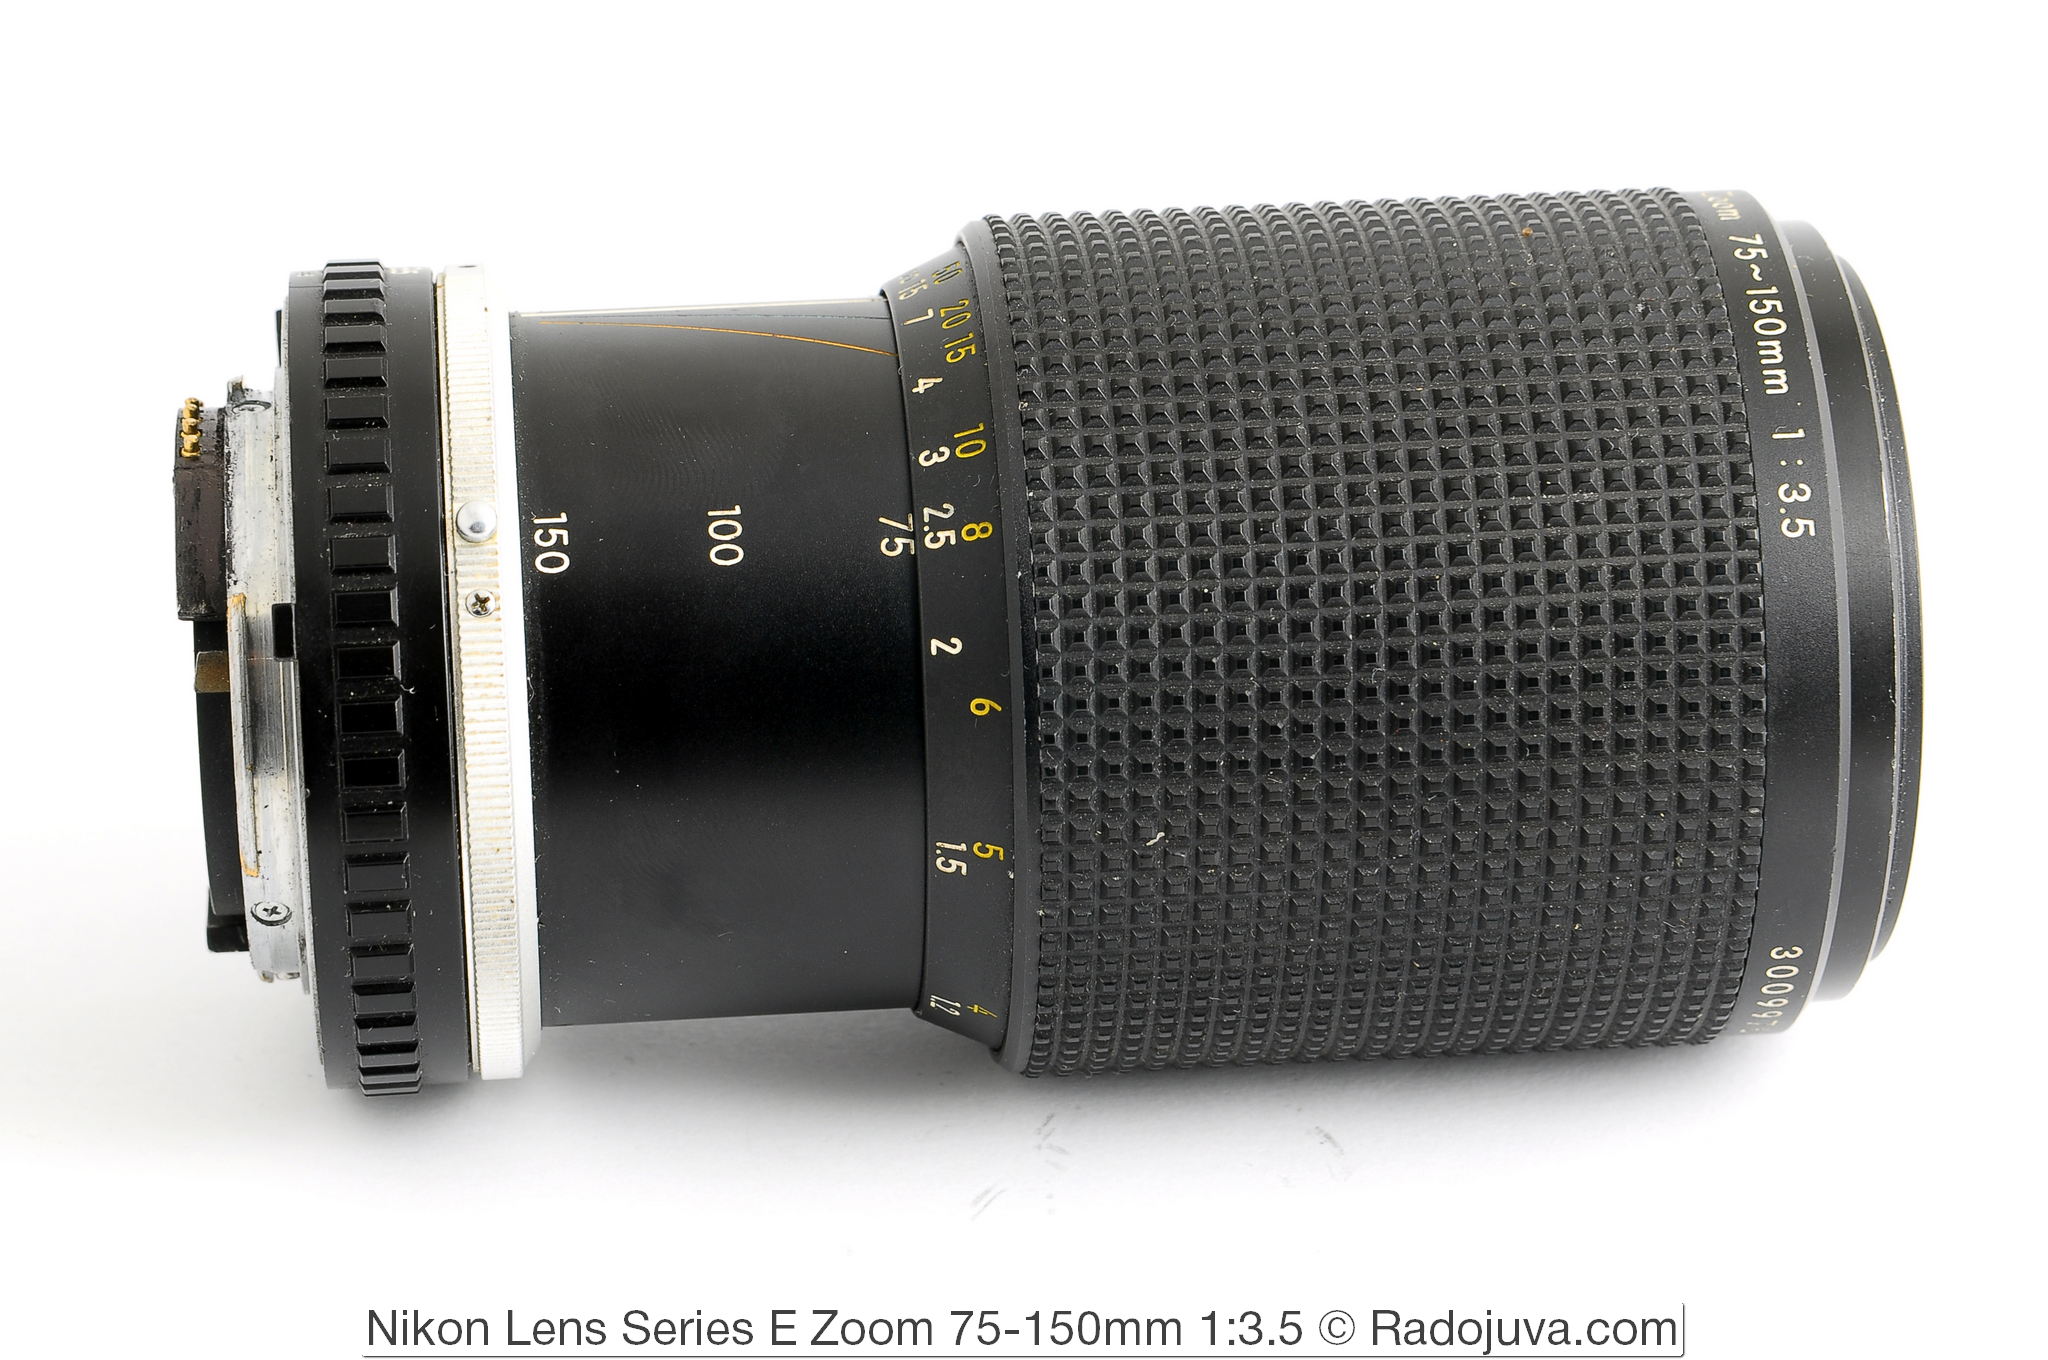 Nikon Lens Serie E Zoom 75-150mm 1:3.5 (MKII)